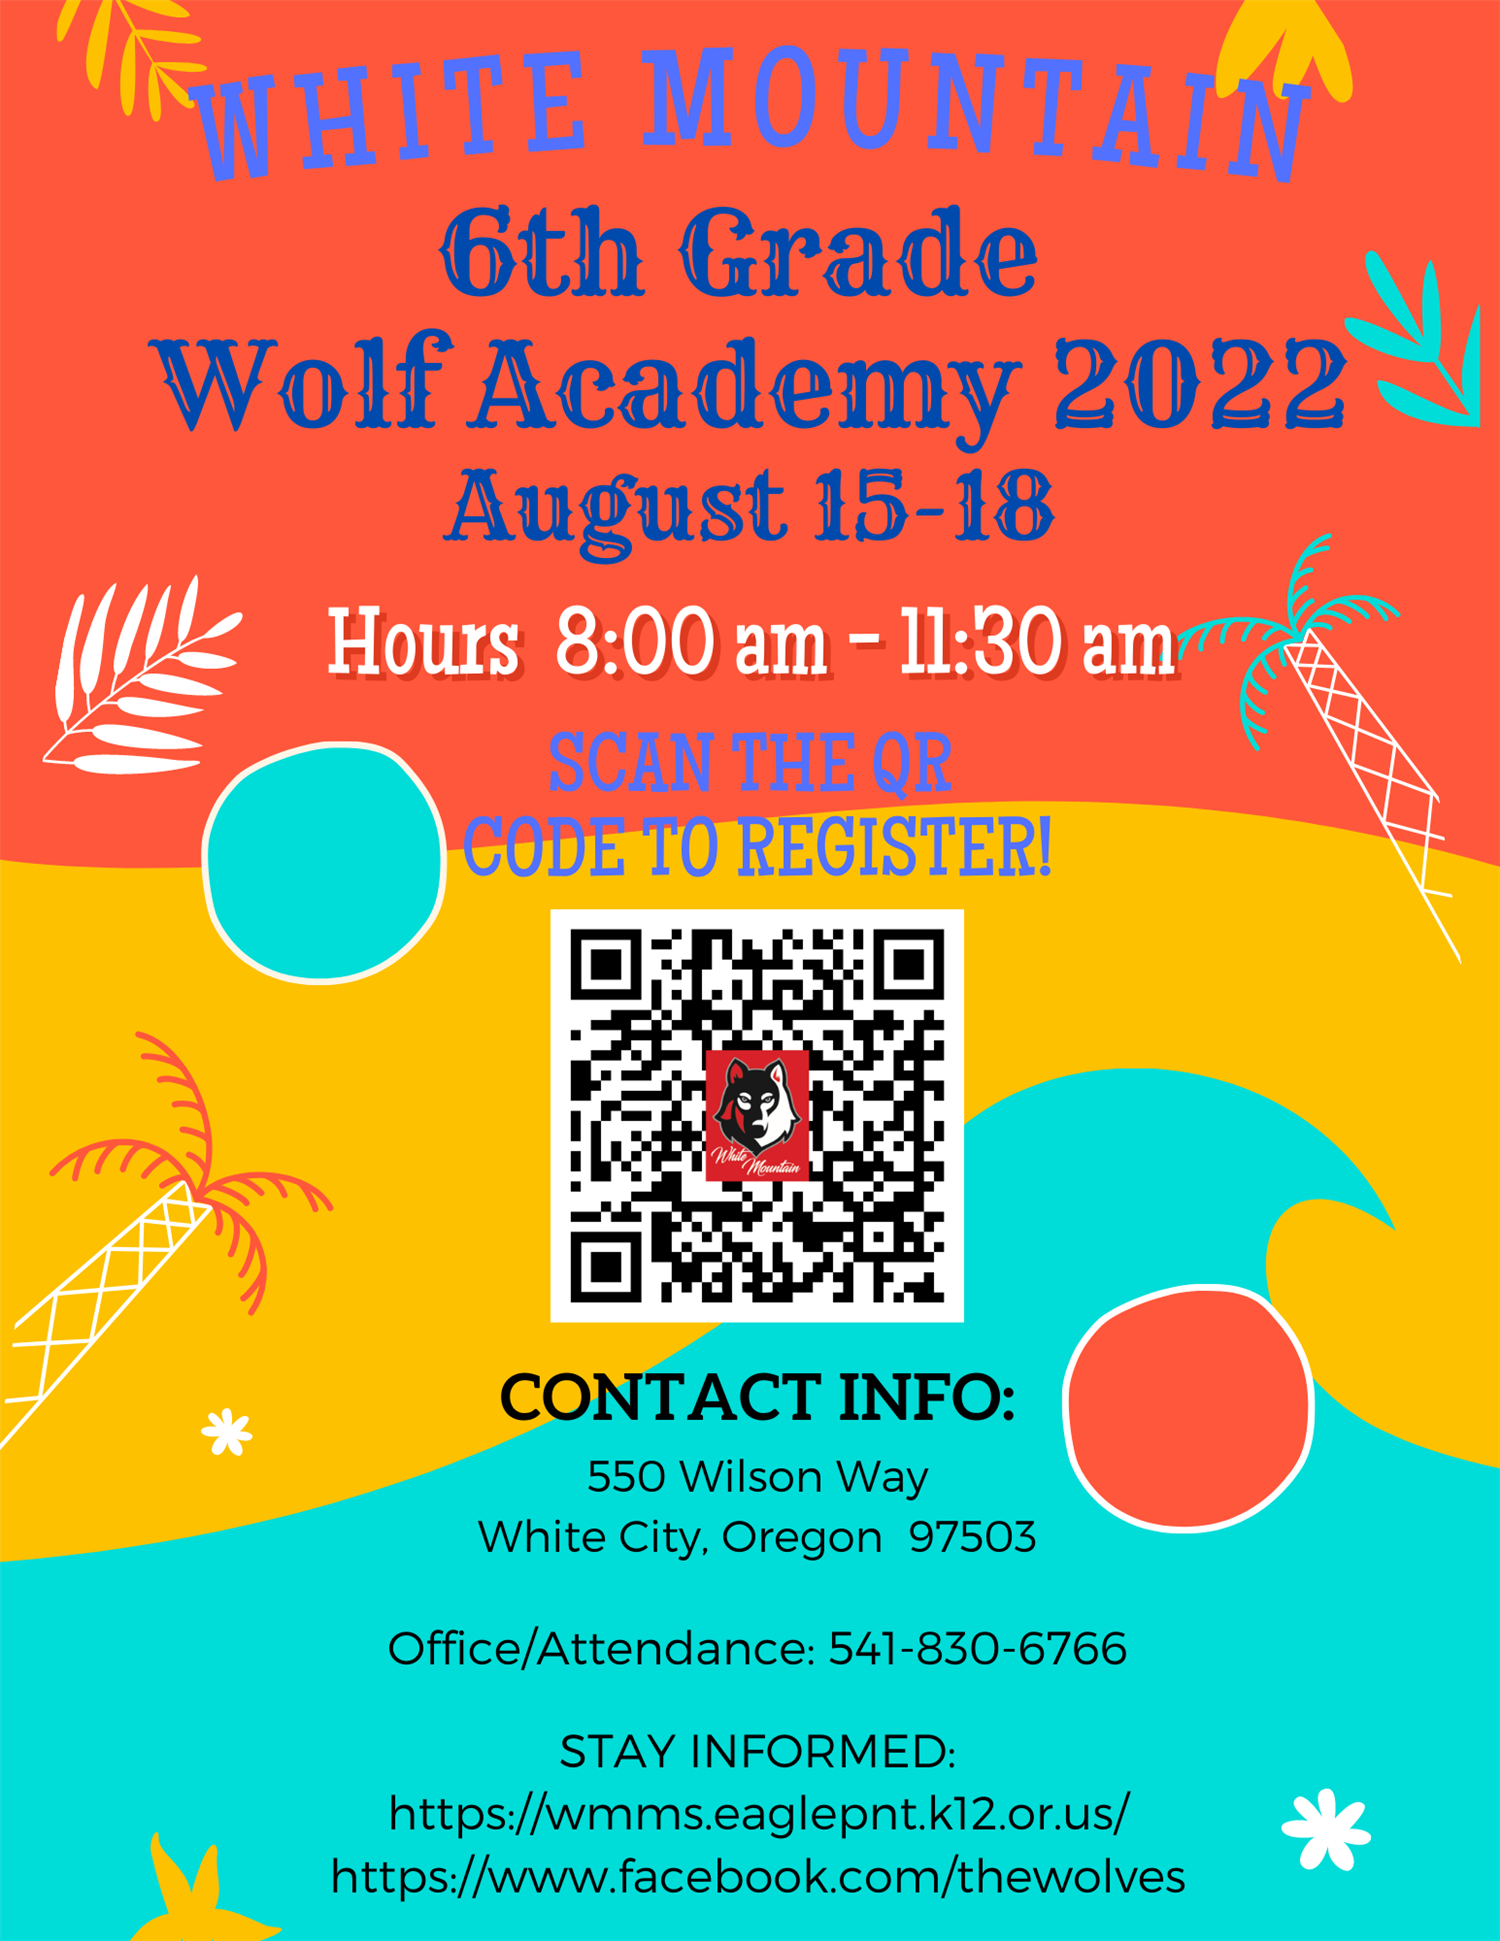 "RIHITE MOUNTAM 6th Grade Wolf Academy 2022 NI August 15-18 Hours 8:00 am - 11:30 am